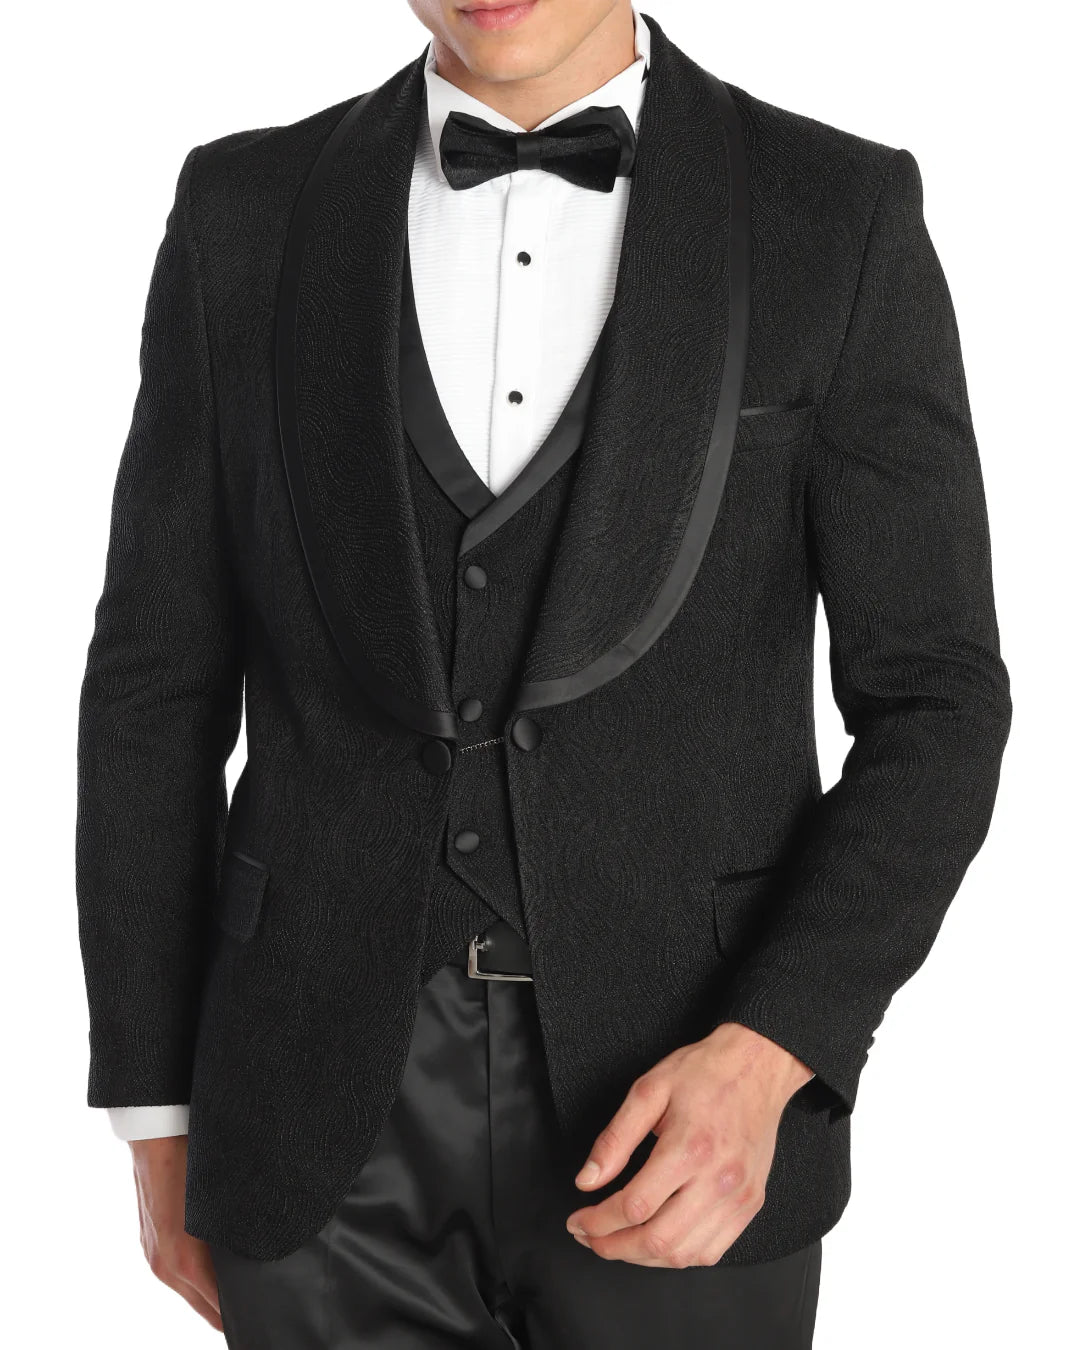 Black Bracode Jacquard Dinner Suit